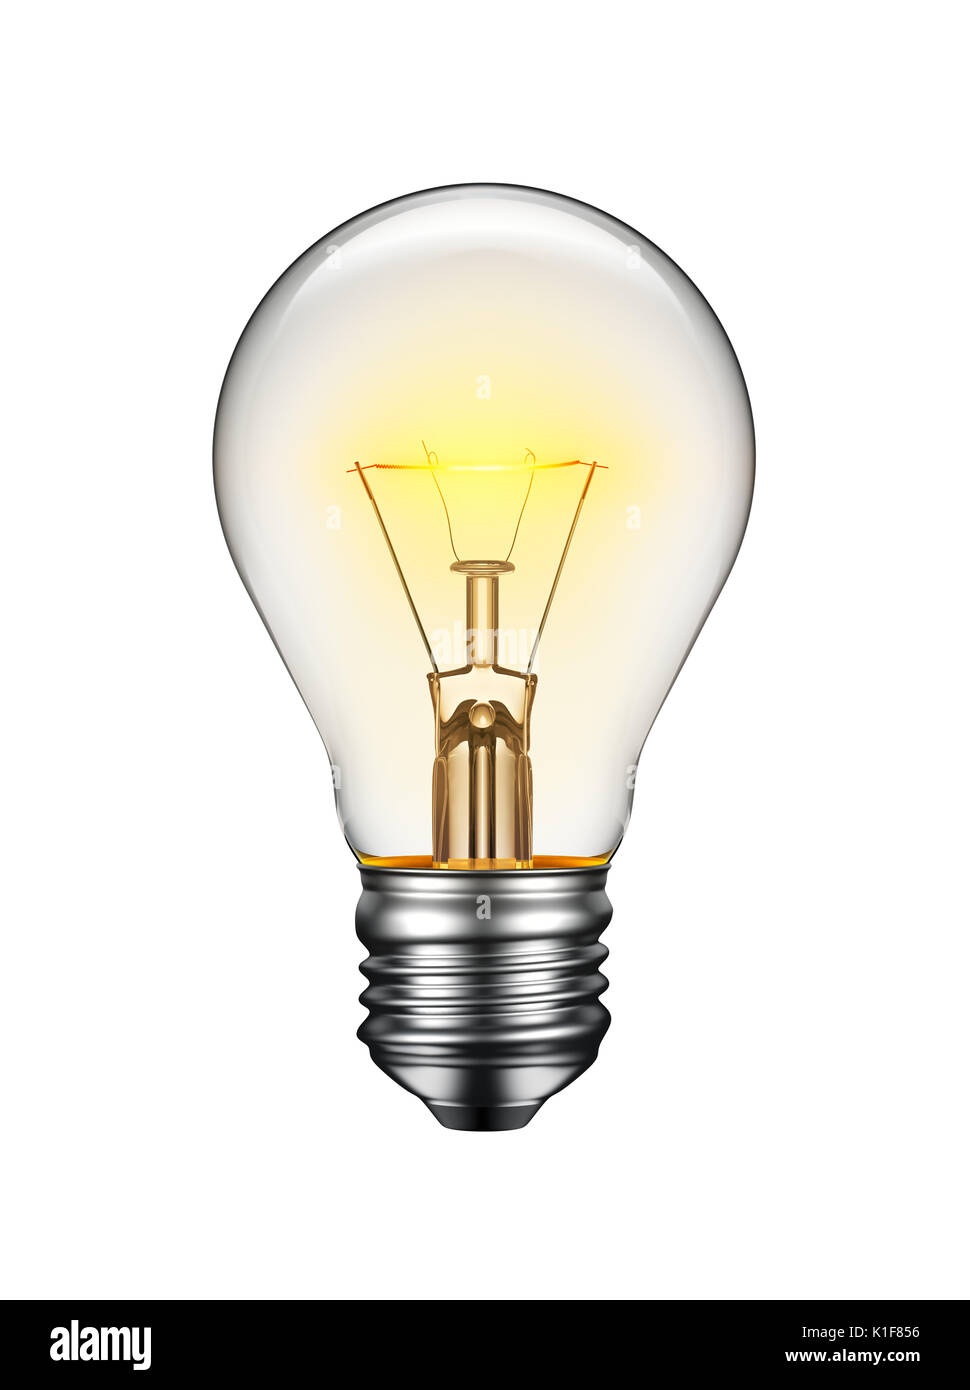 Glowing light bulb isolated on white background Stock Photo